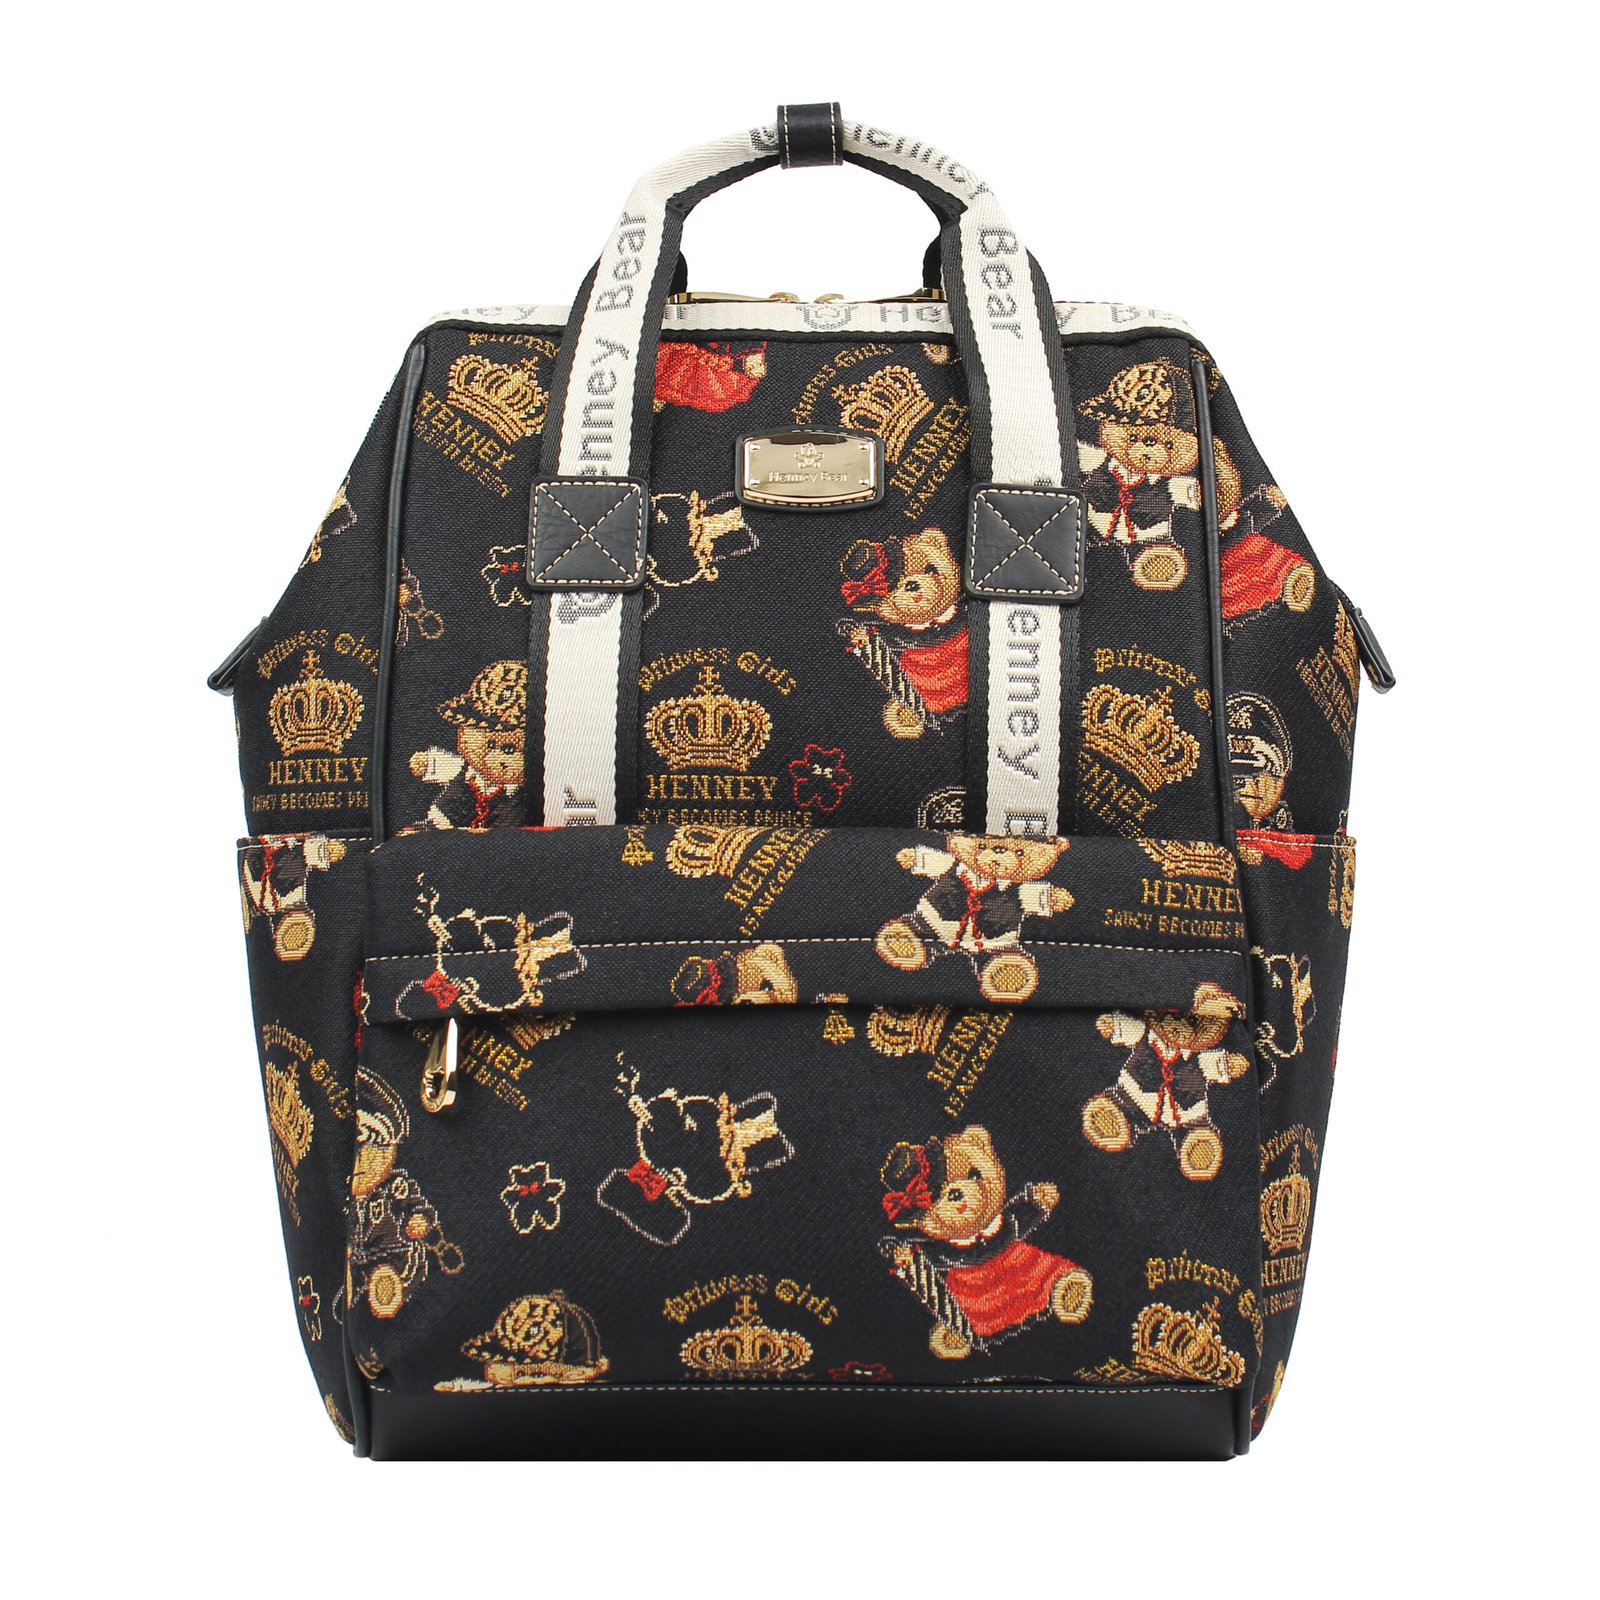 Henney Bear backpack crown bear laptop bag